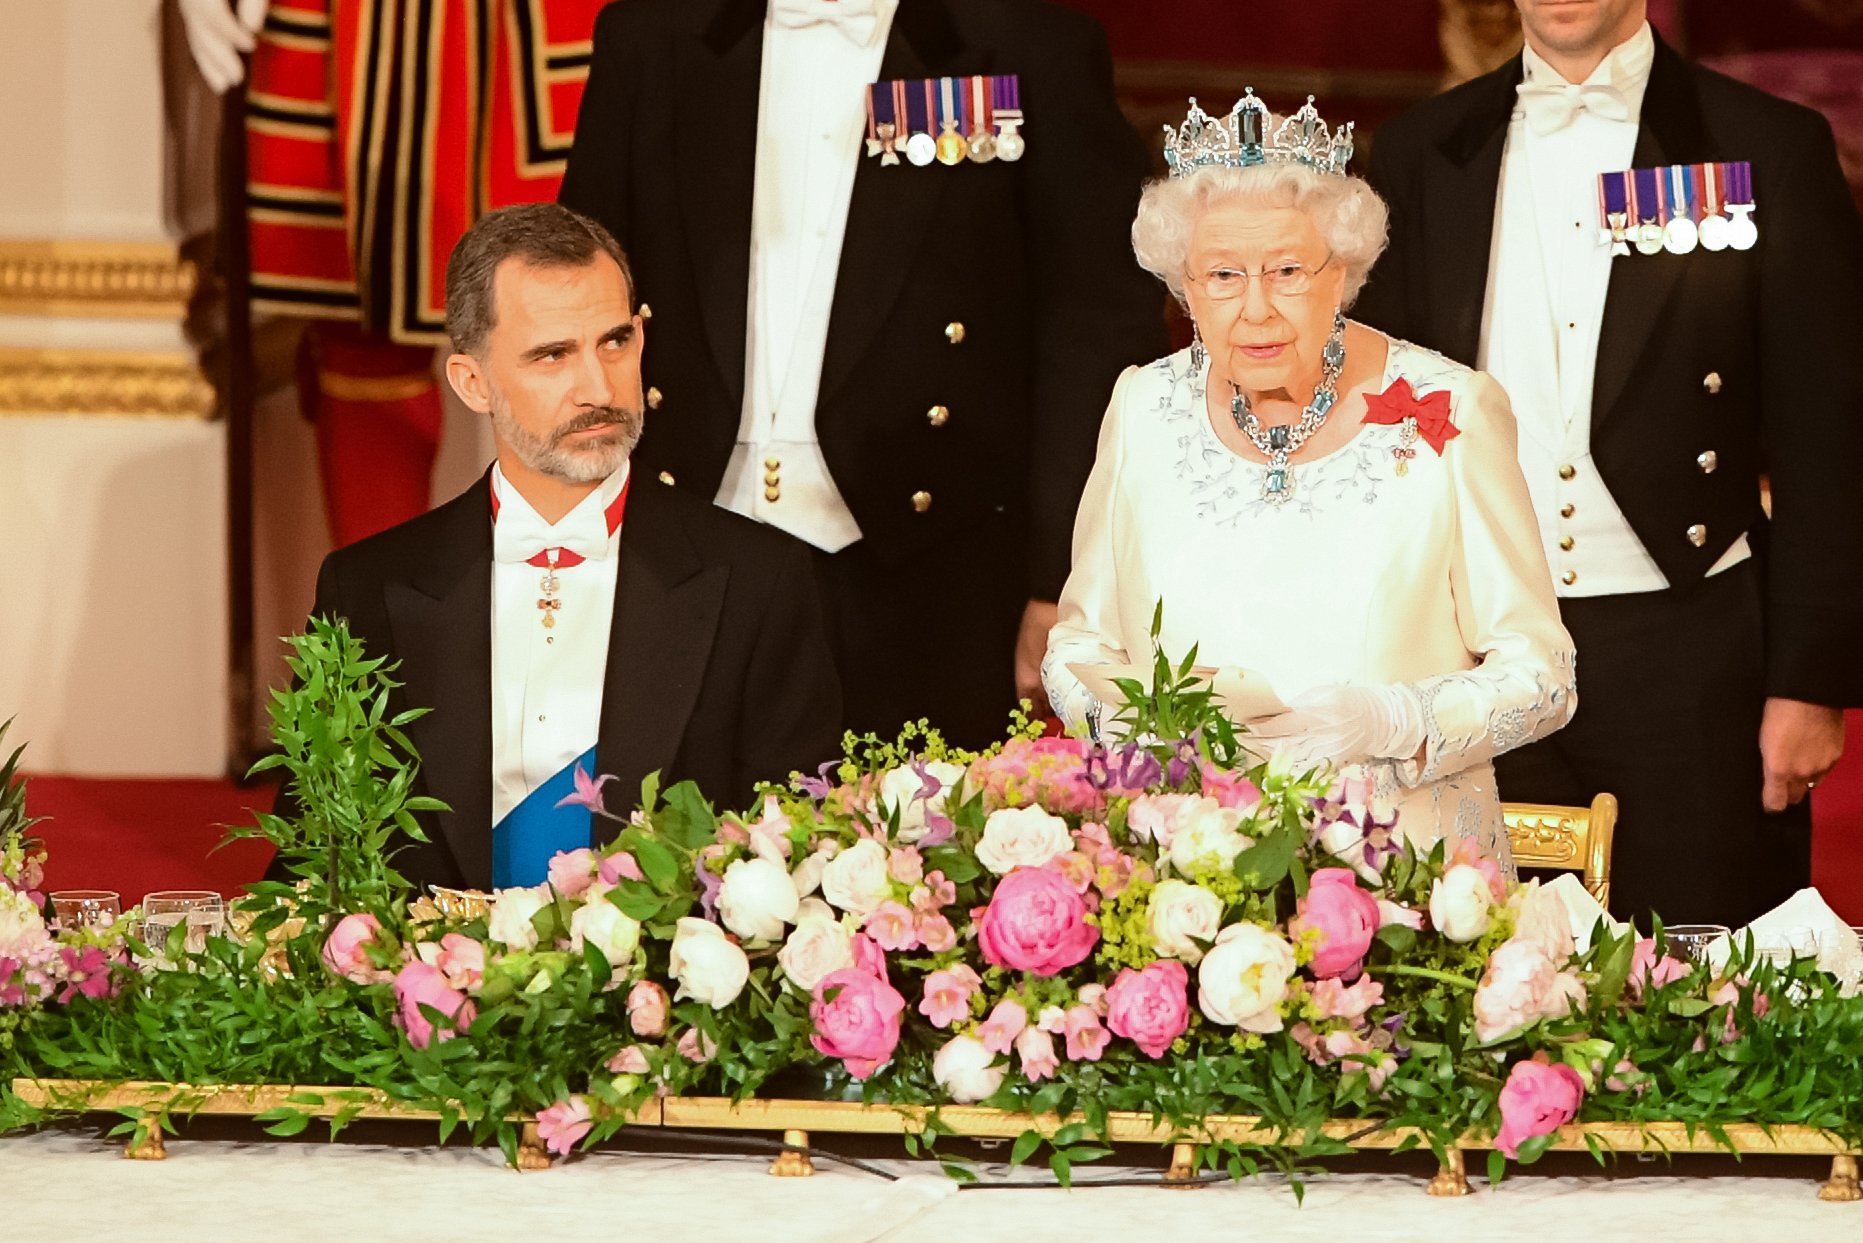 Christmas speeches: Queen Elizabeth II shows Spain's Felipe VI how one does it